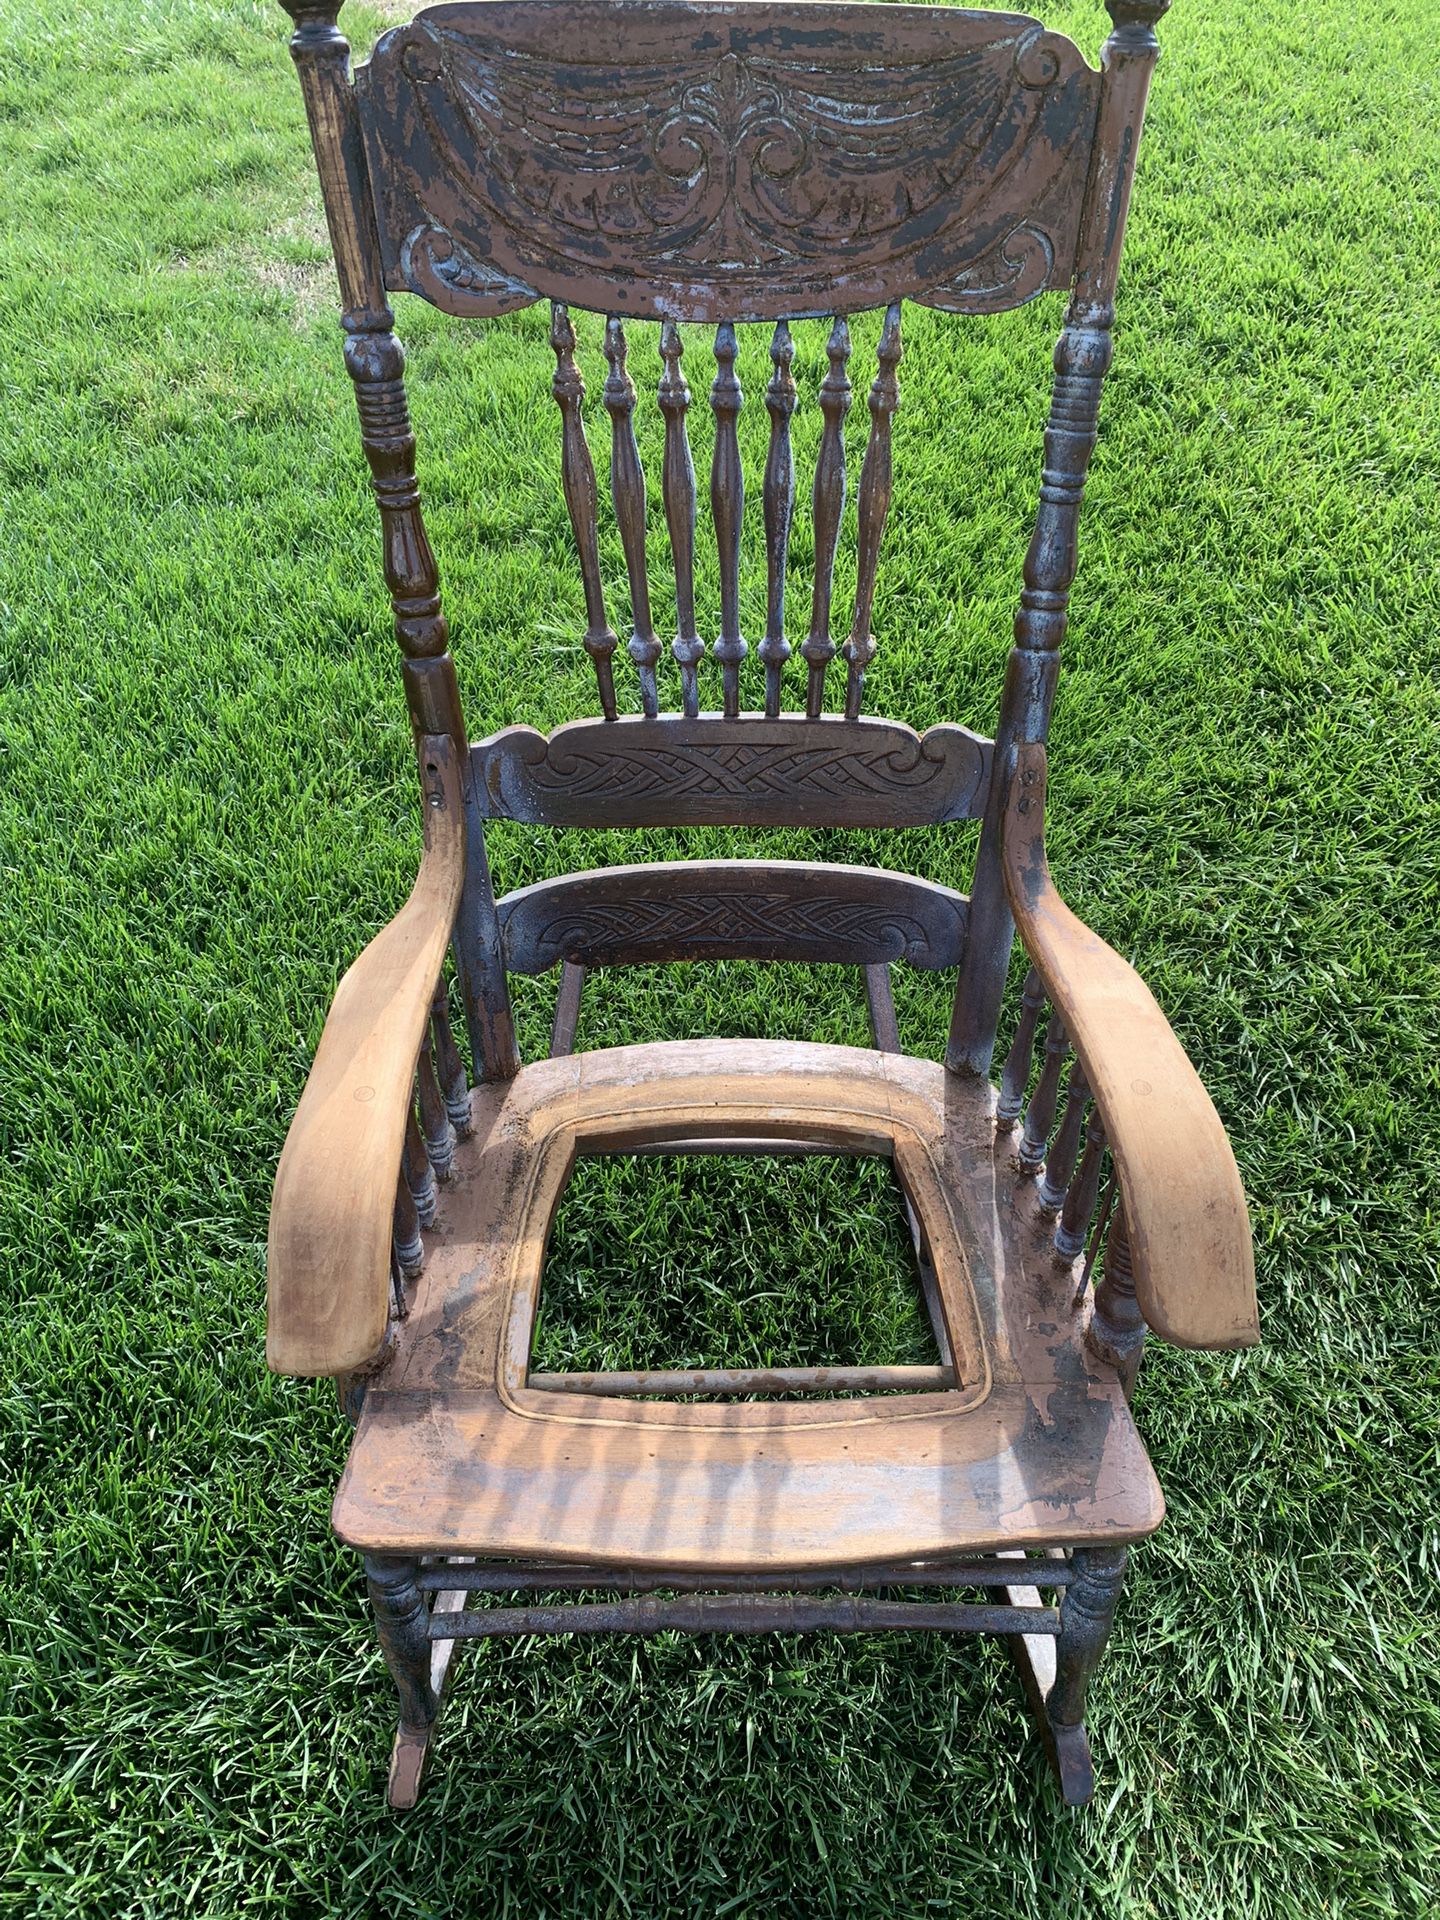 Antique Rocking Chair !! Needs Refinishing! 